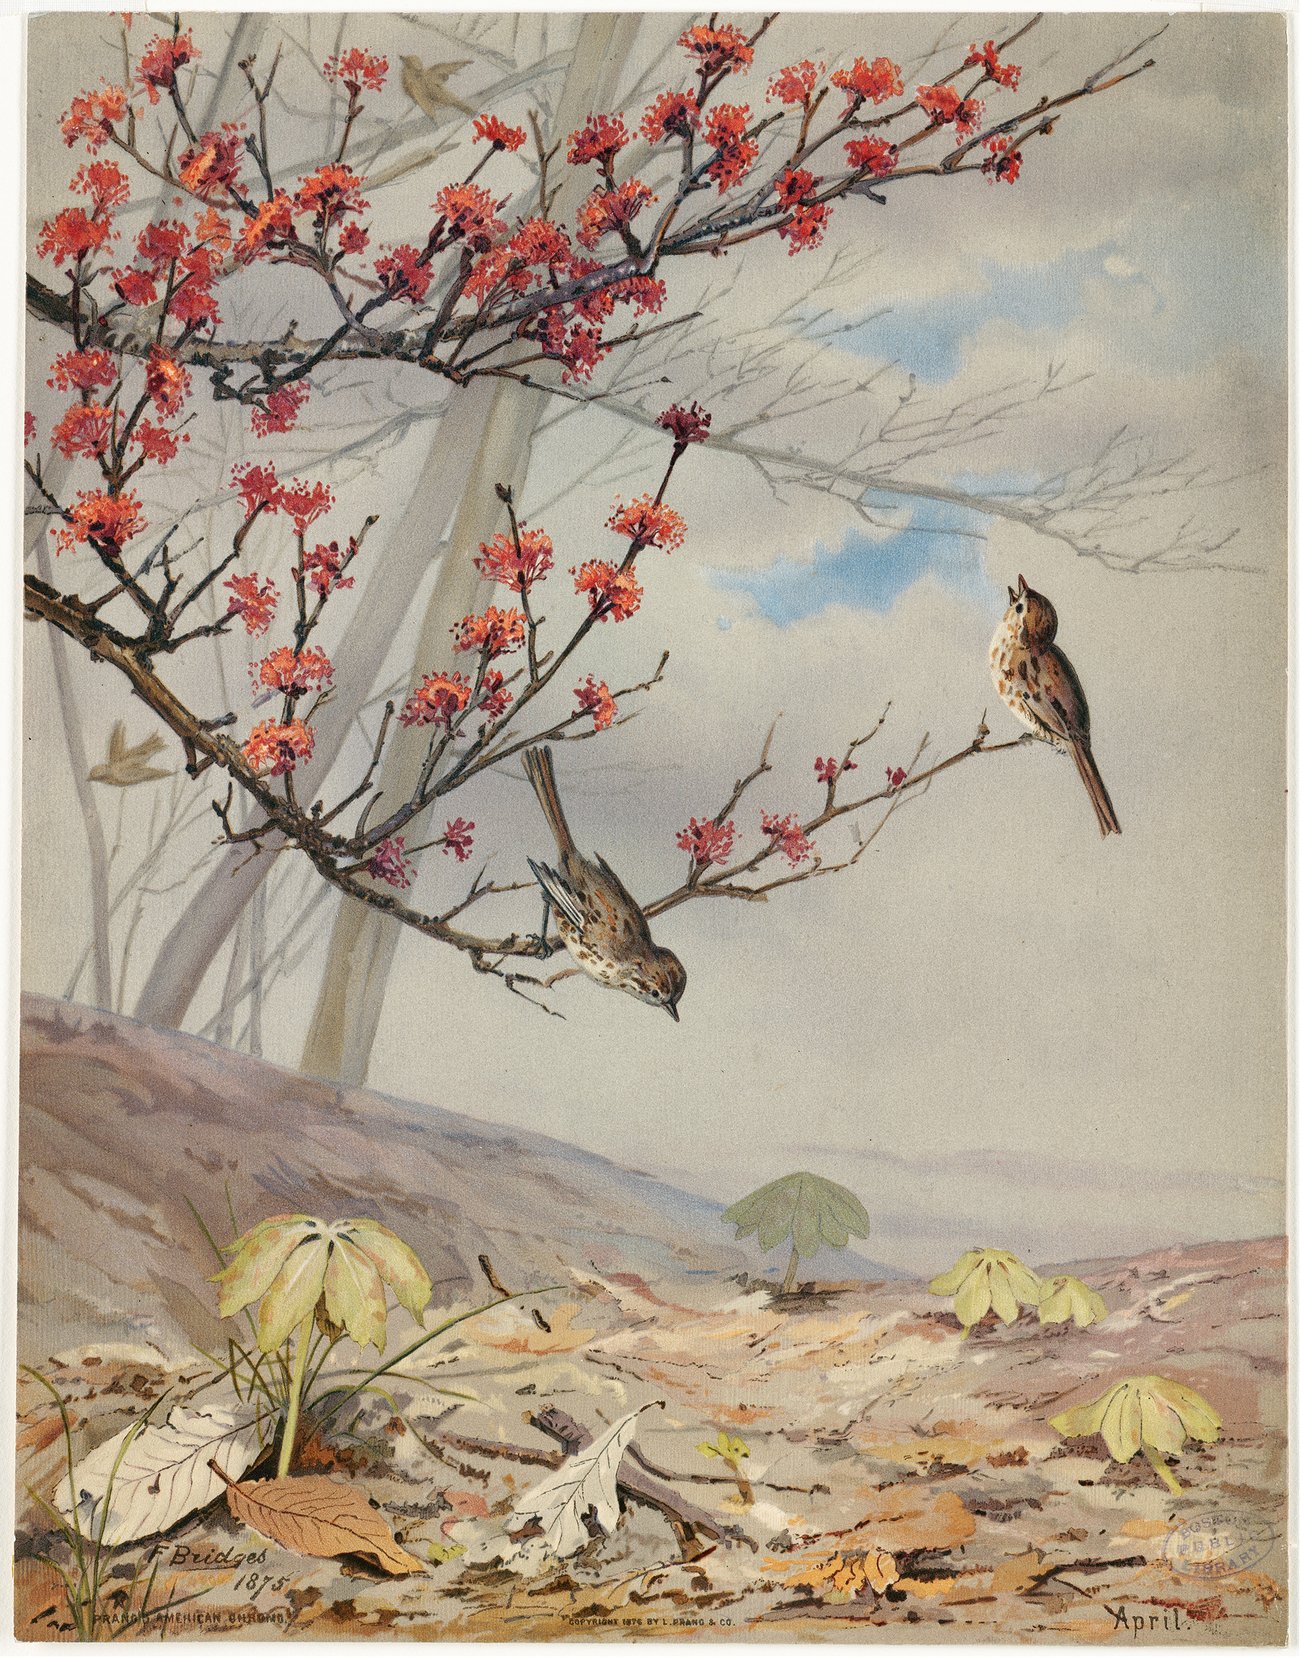 April (1876)